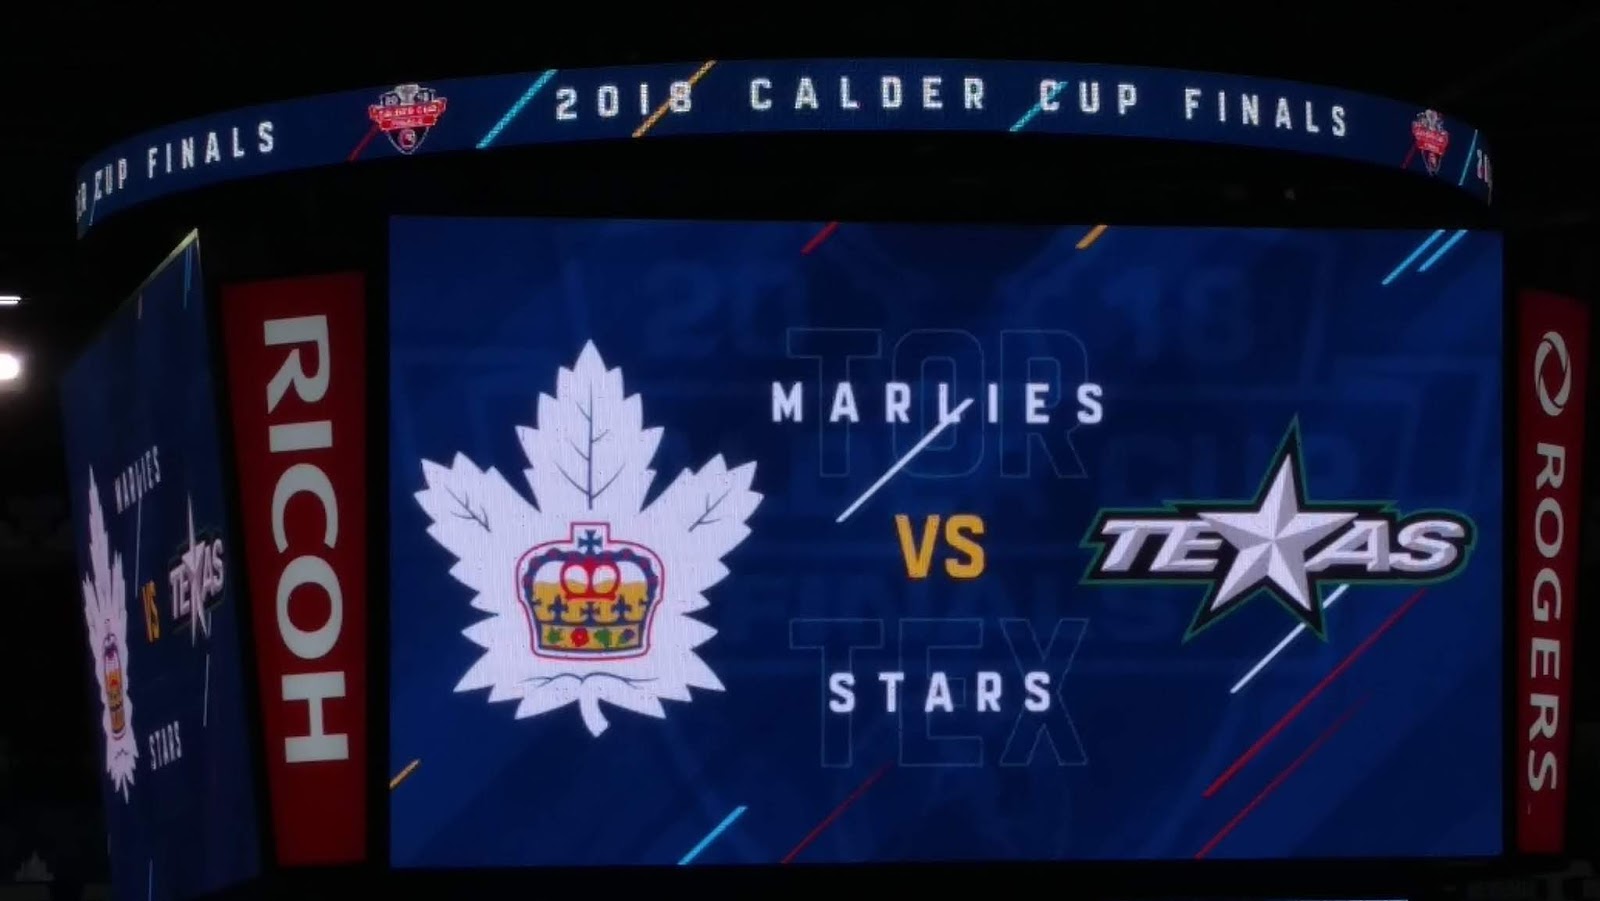 Toronto Marlies heading to AHL Calder Cup final